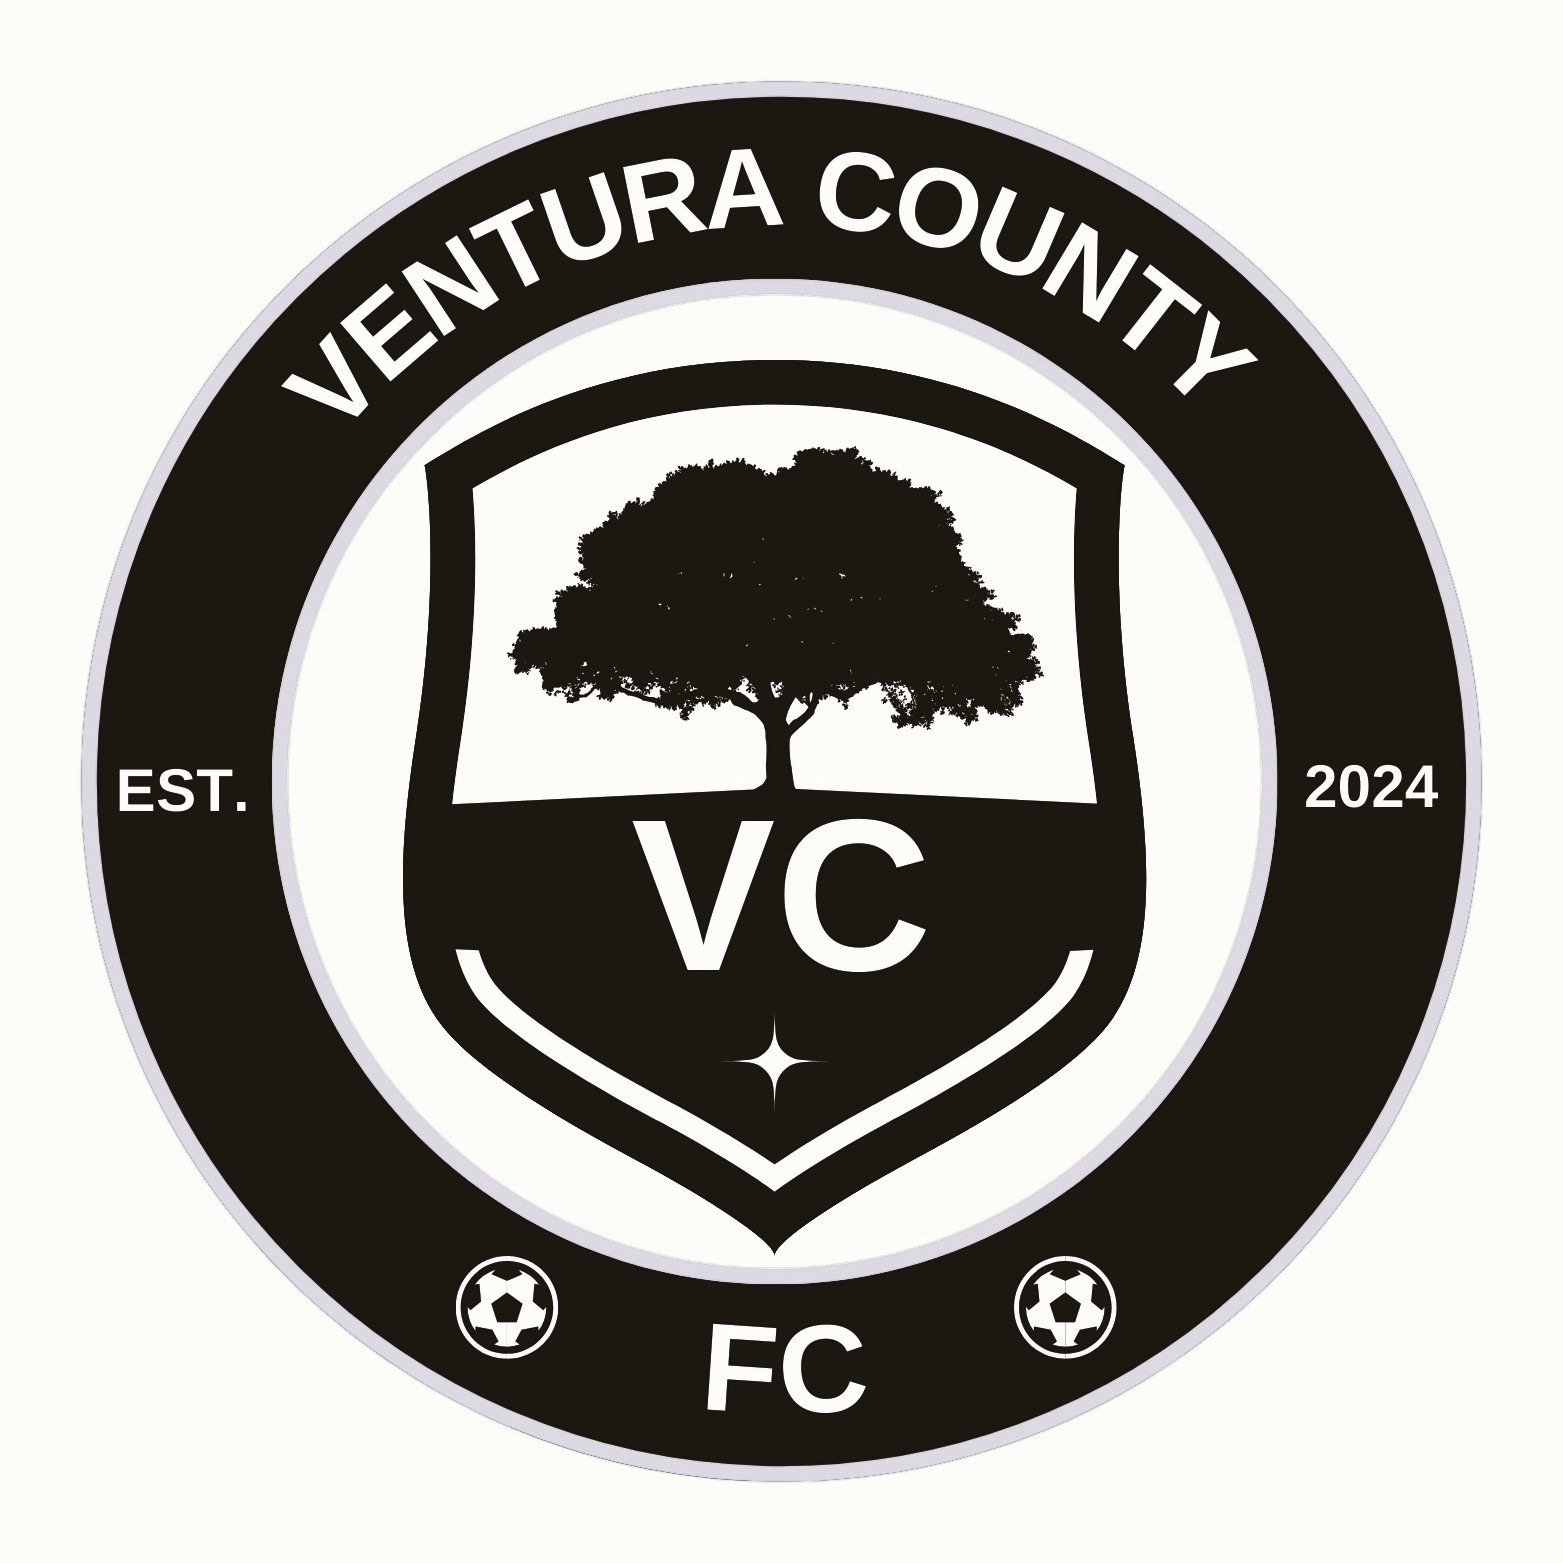  VENTURA COUNTY VC FC EST. 2024